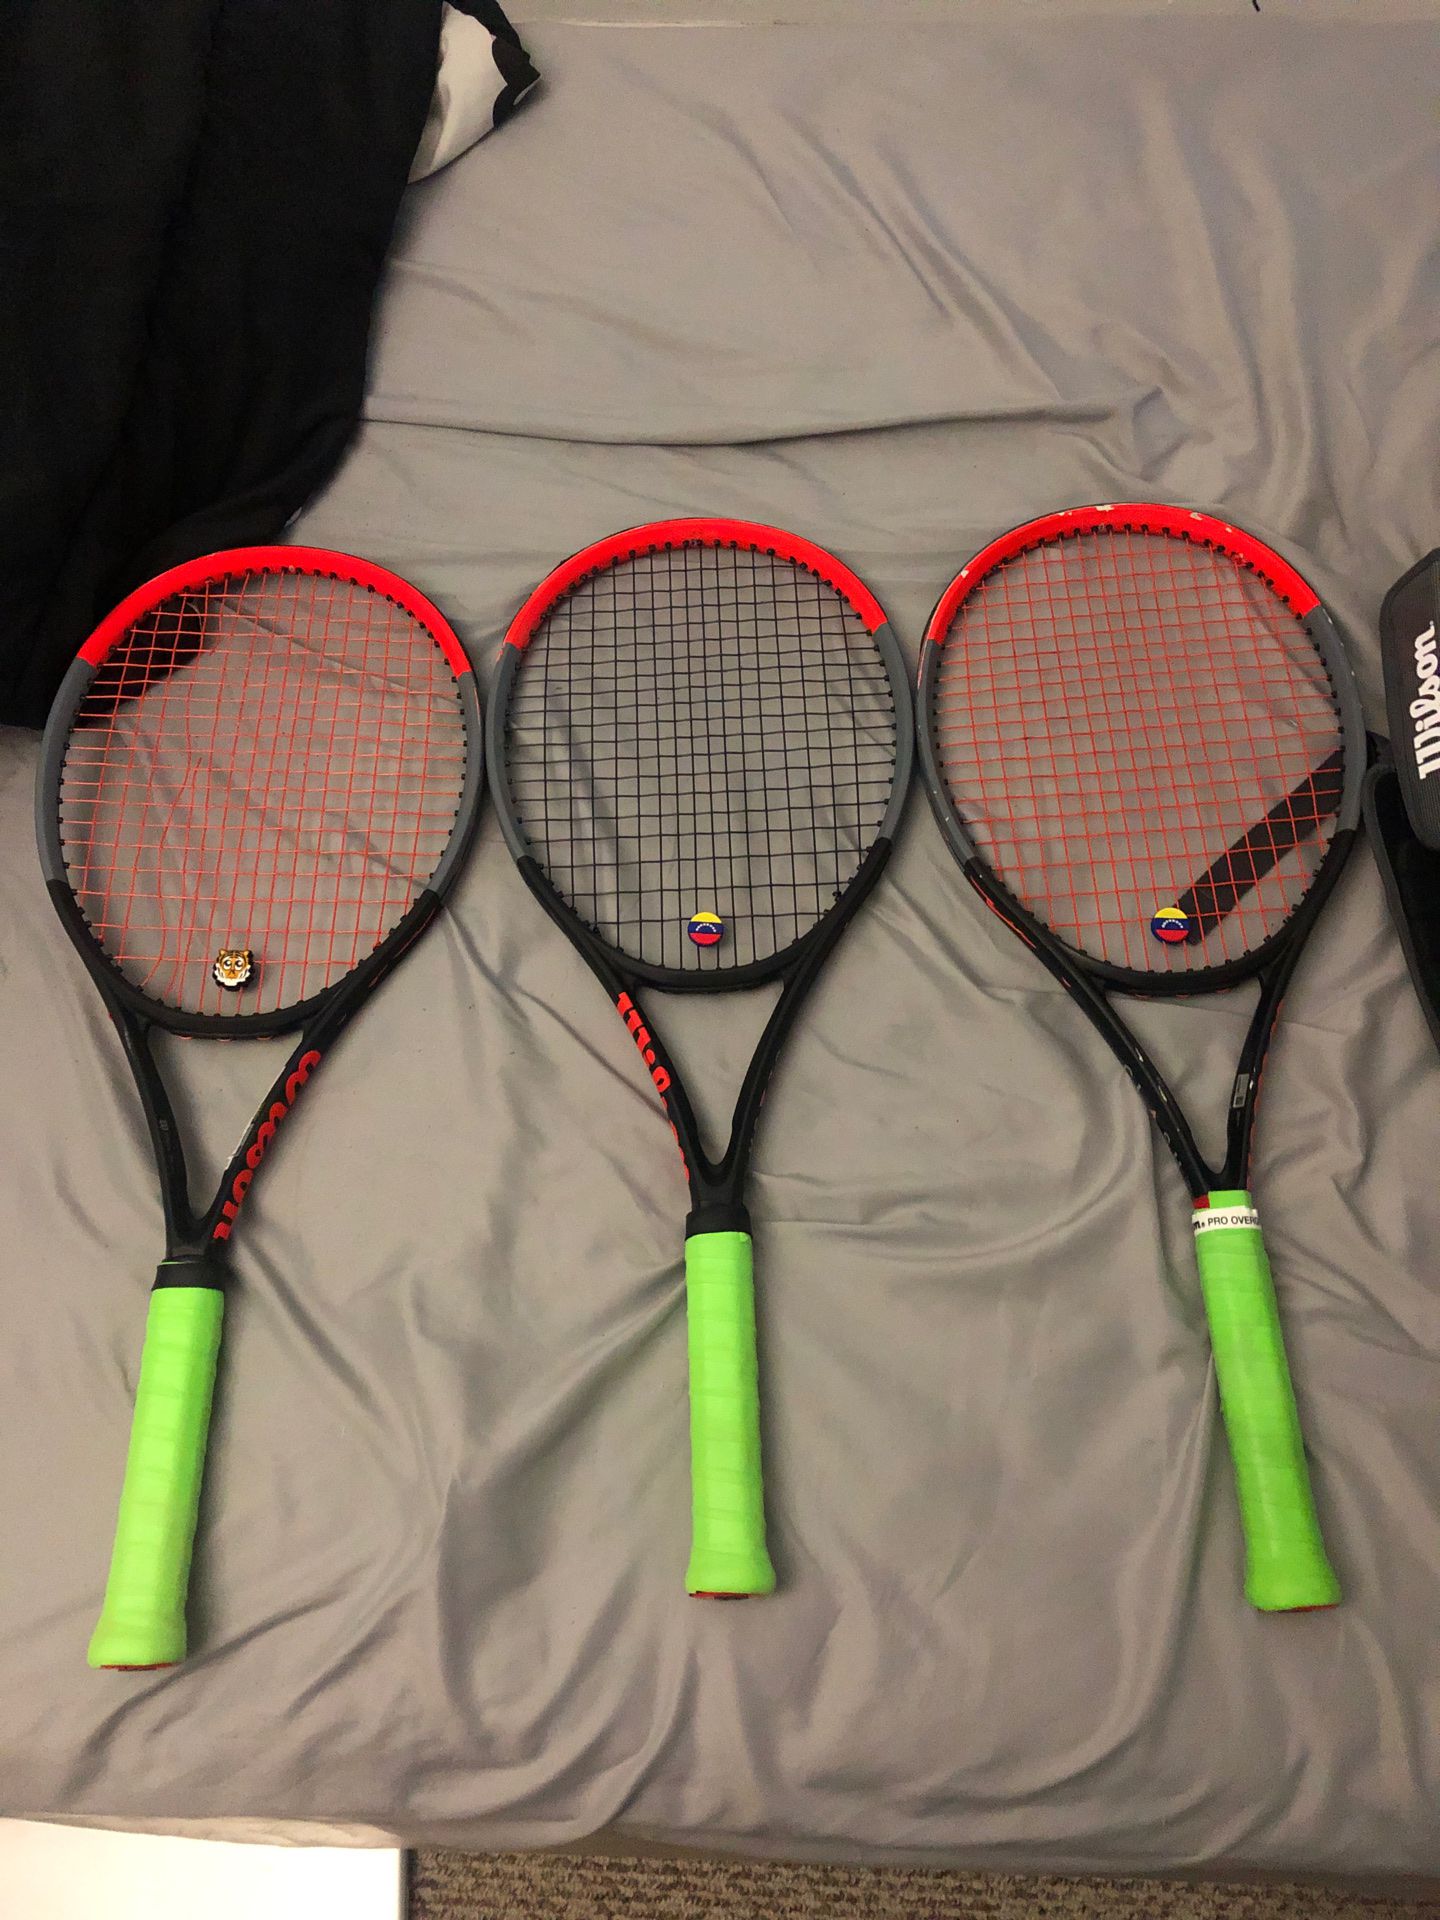 Wilson tennis raquetcs and bag